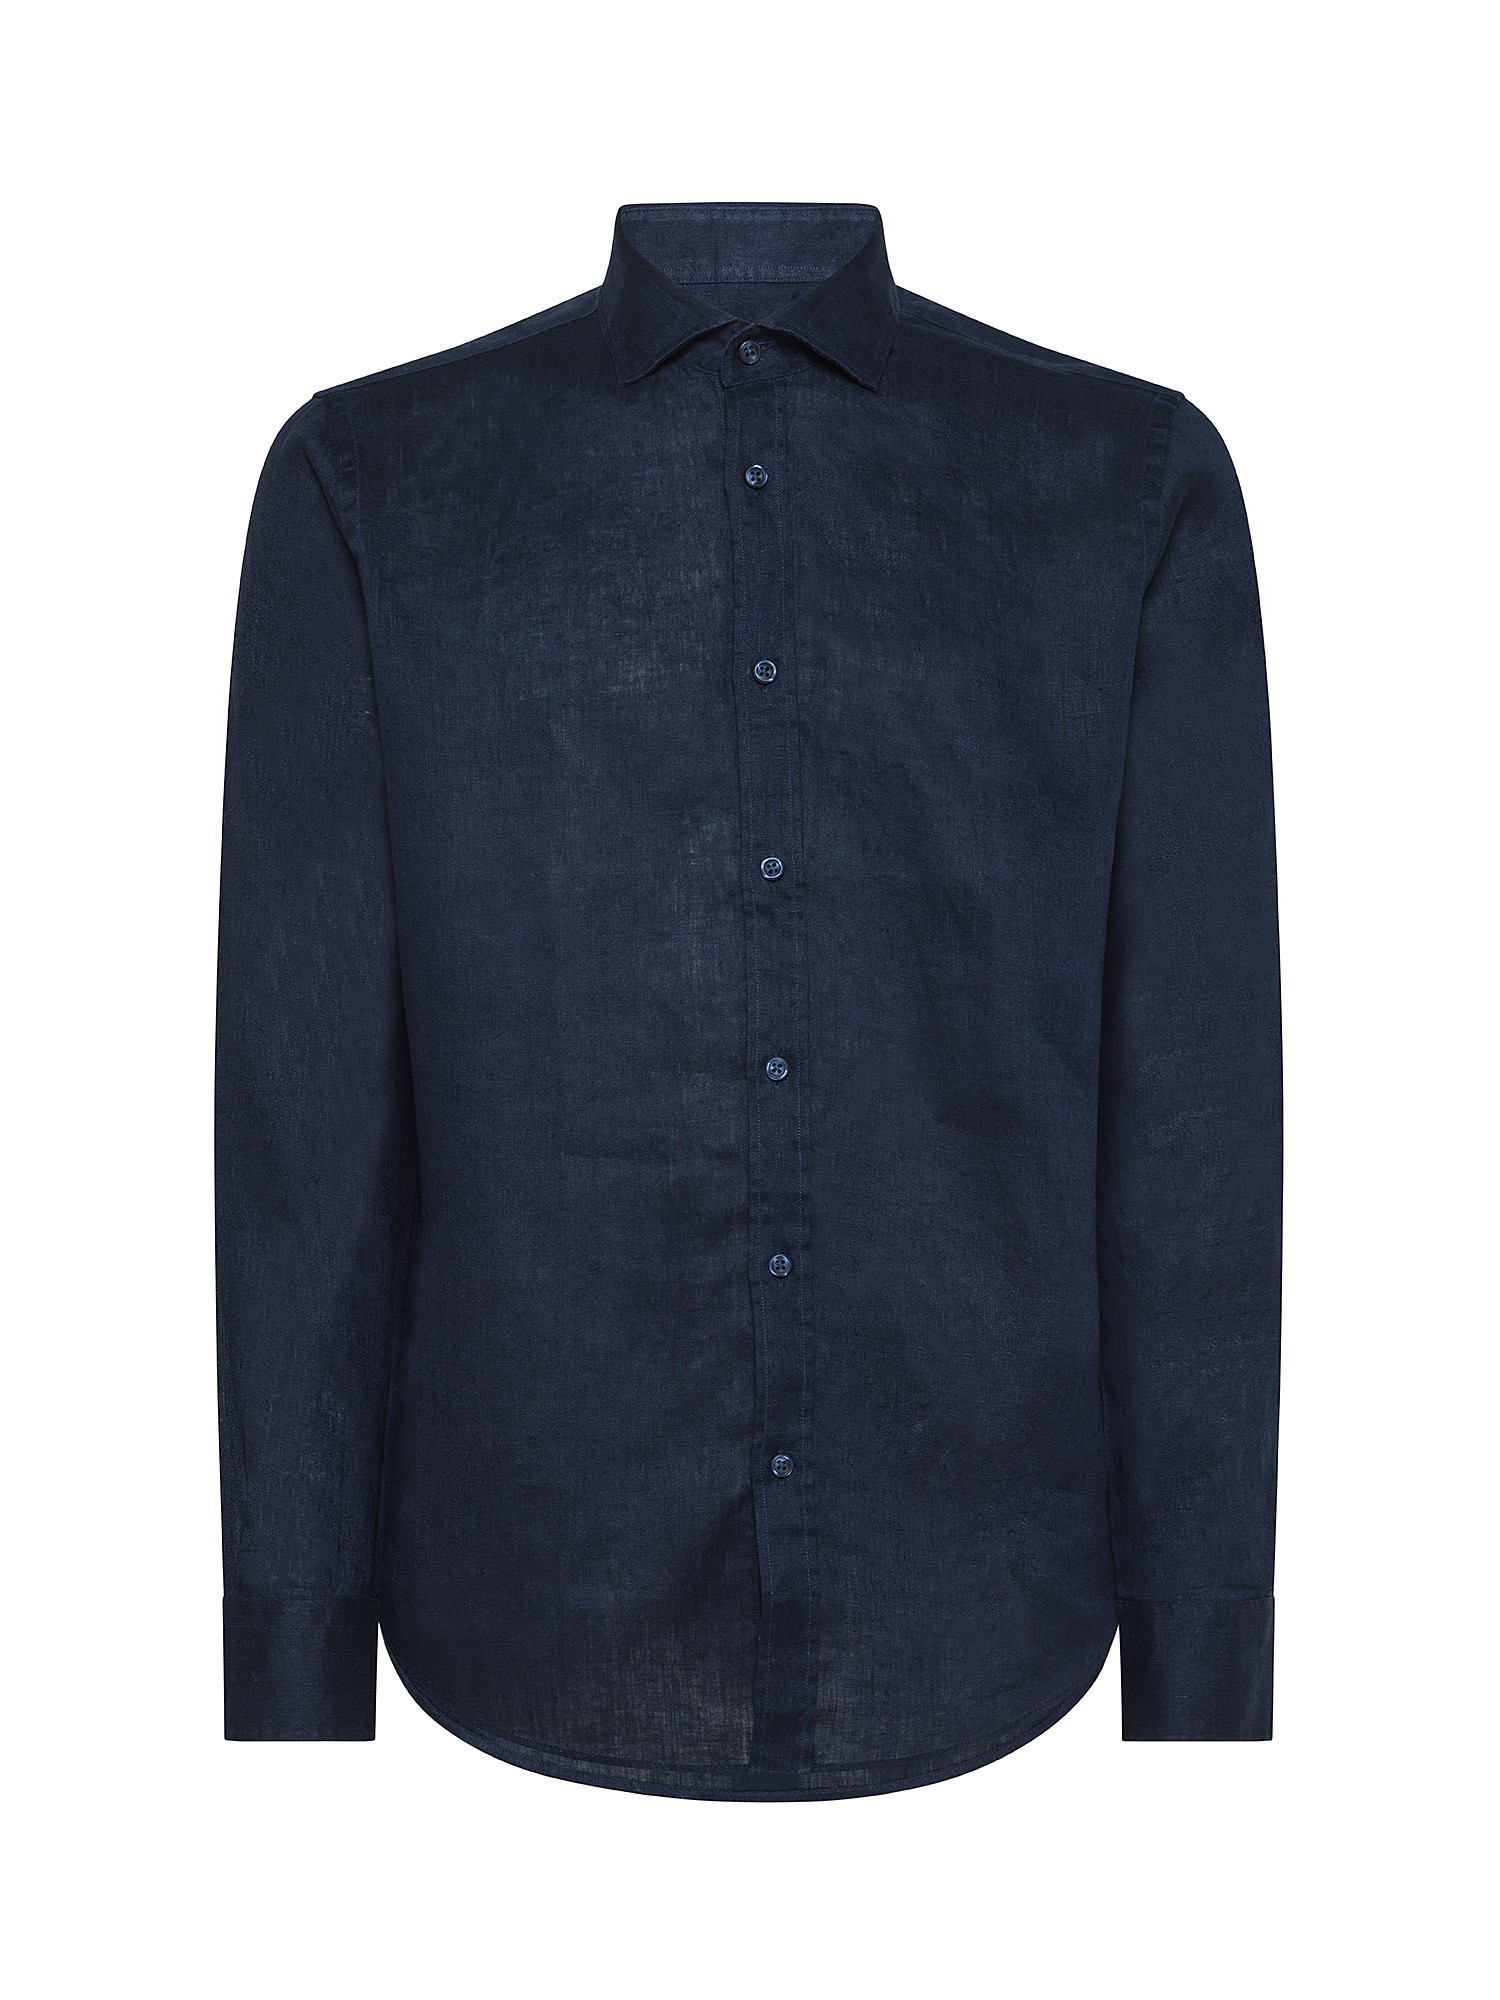 Luca D'Altieri - Tailor fit shirt in pure linen, Dark Blue, large image number 0